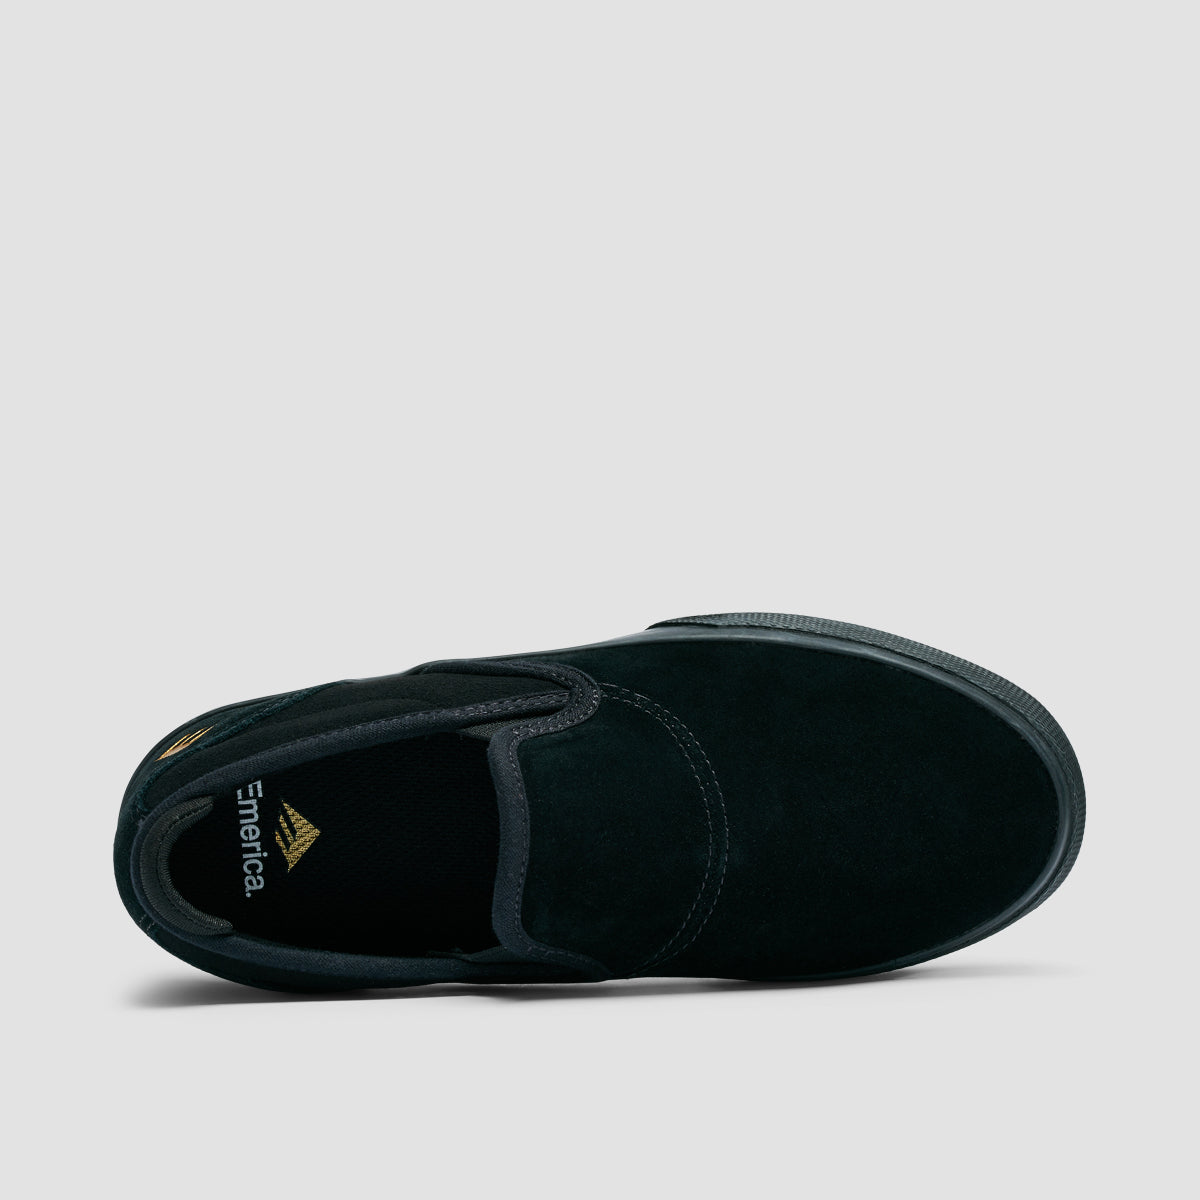 Emerica Wino G6 Slip On Shoes Black/Black - Kids